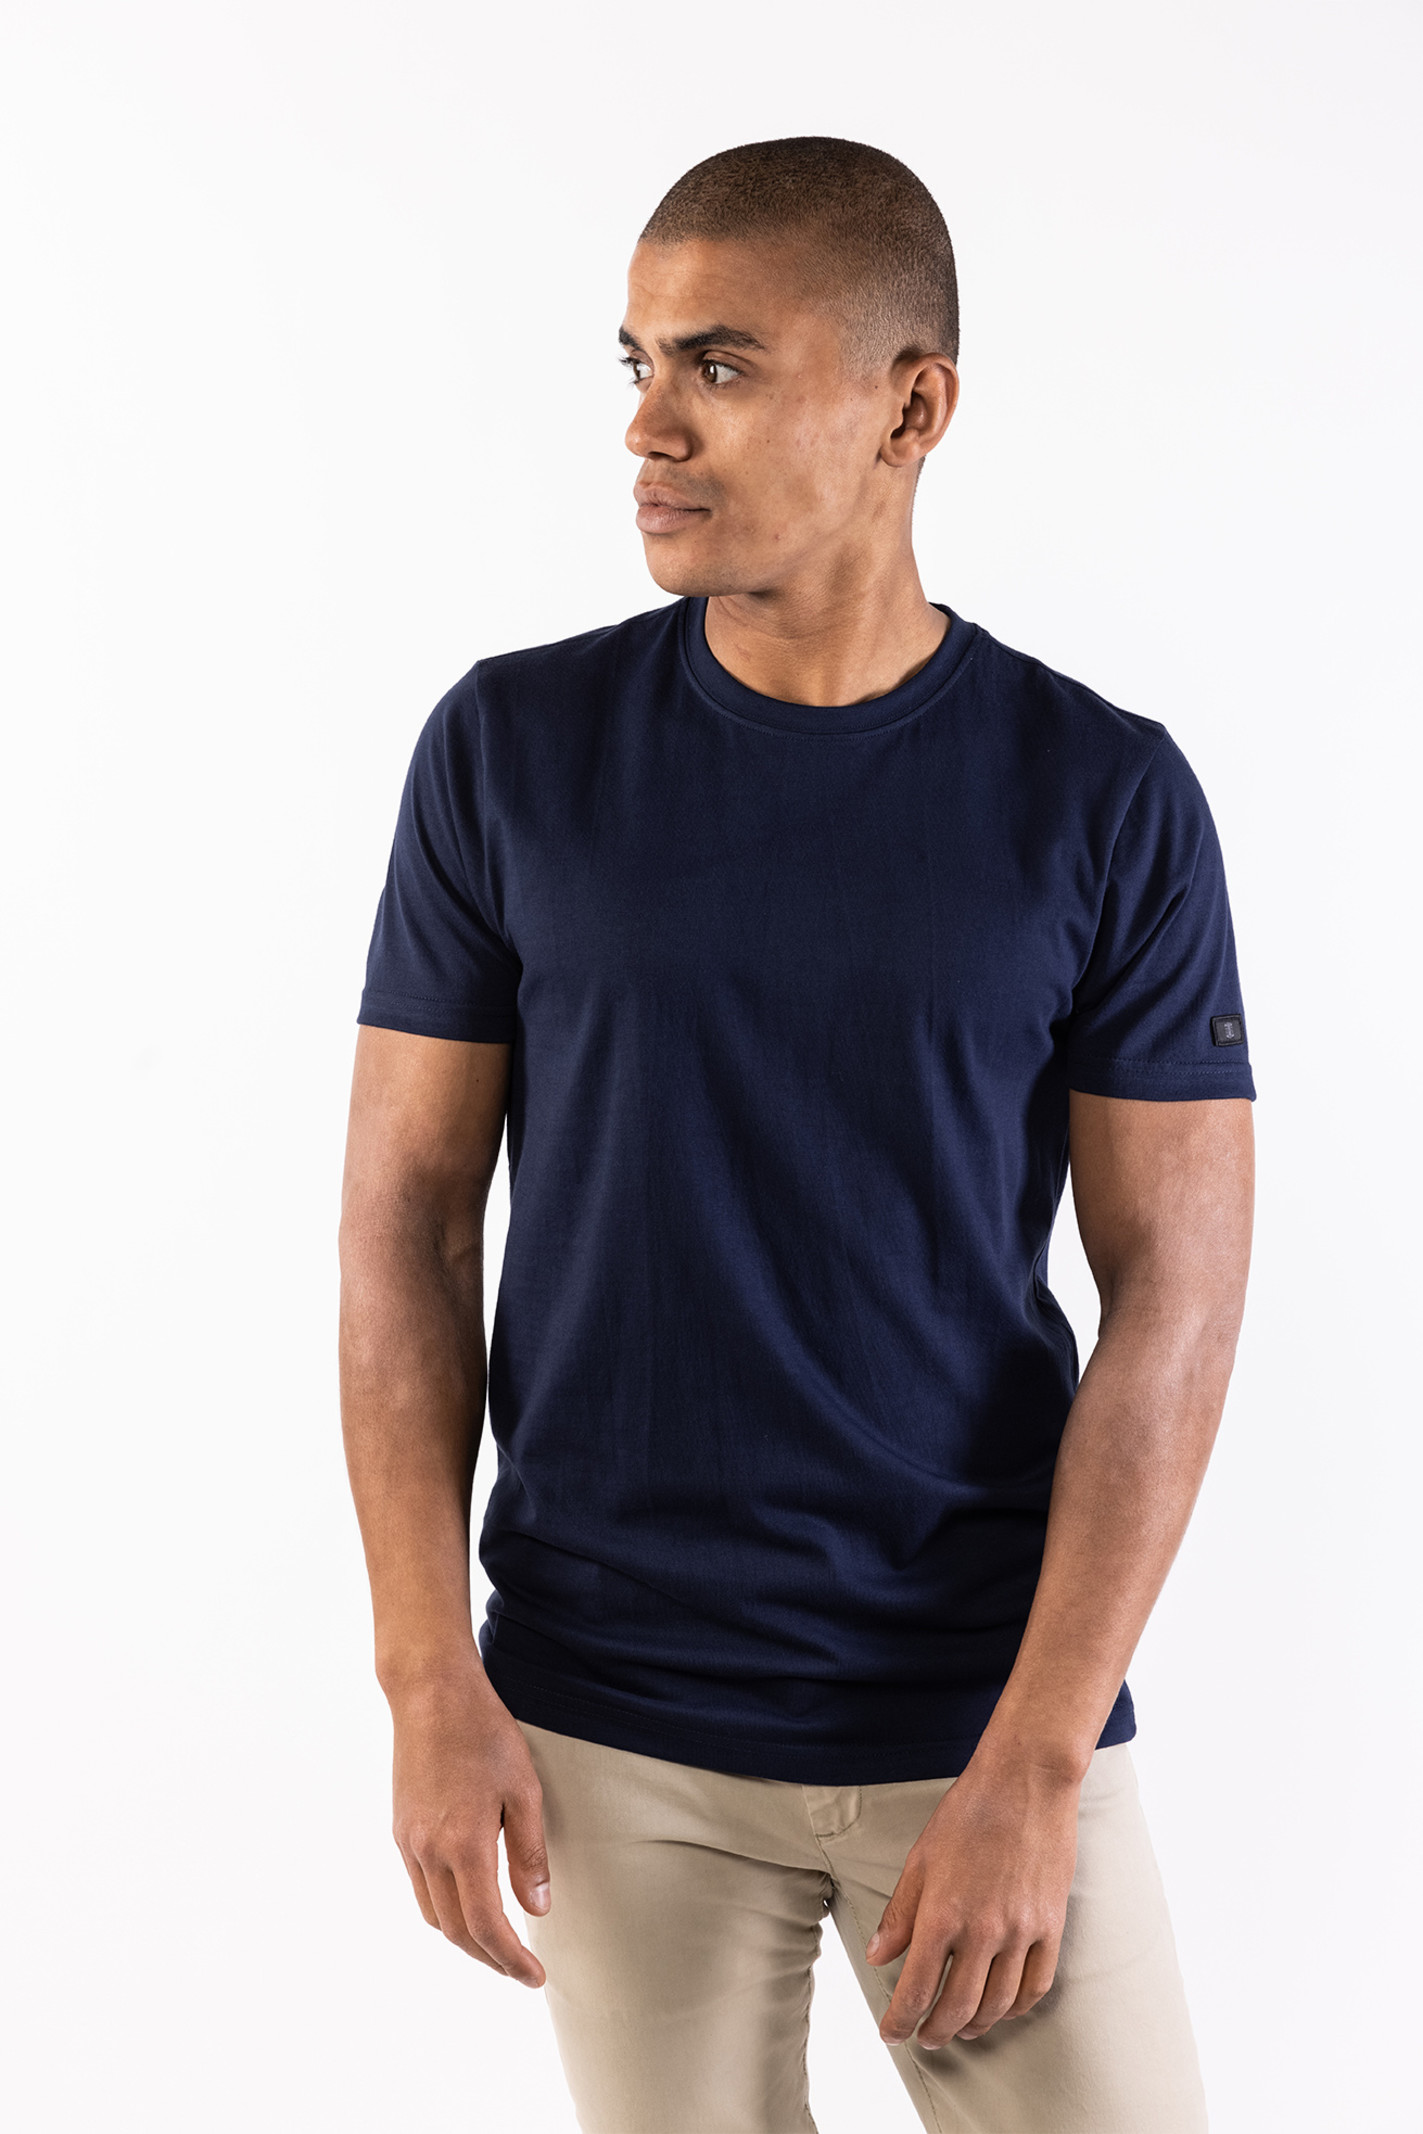 Presly & Sun T-shirt Conner basic navy